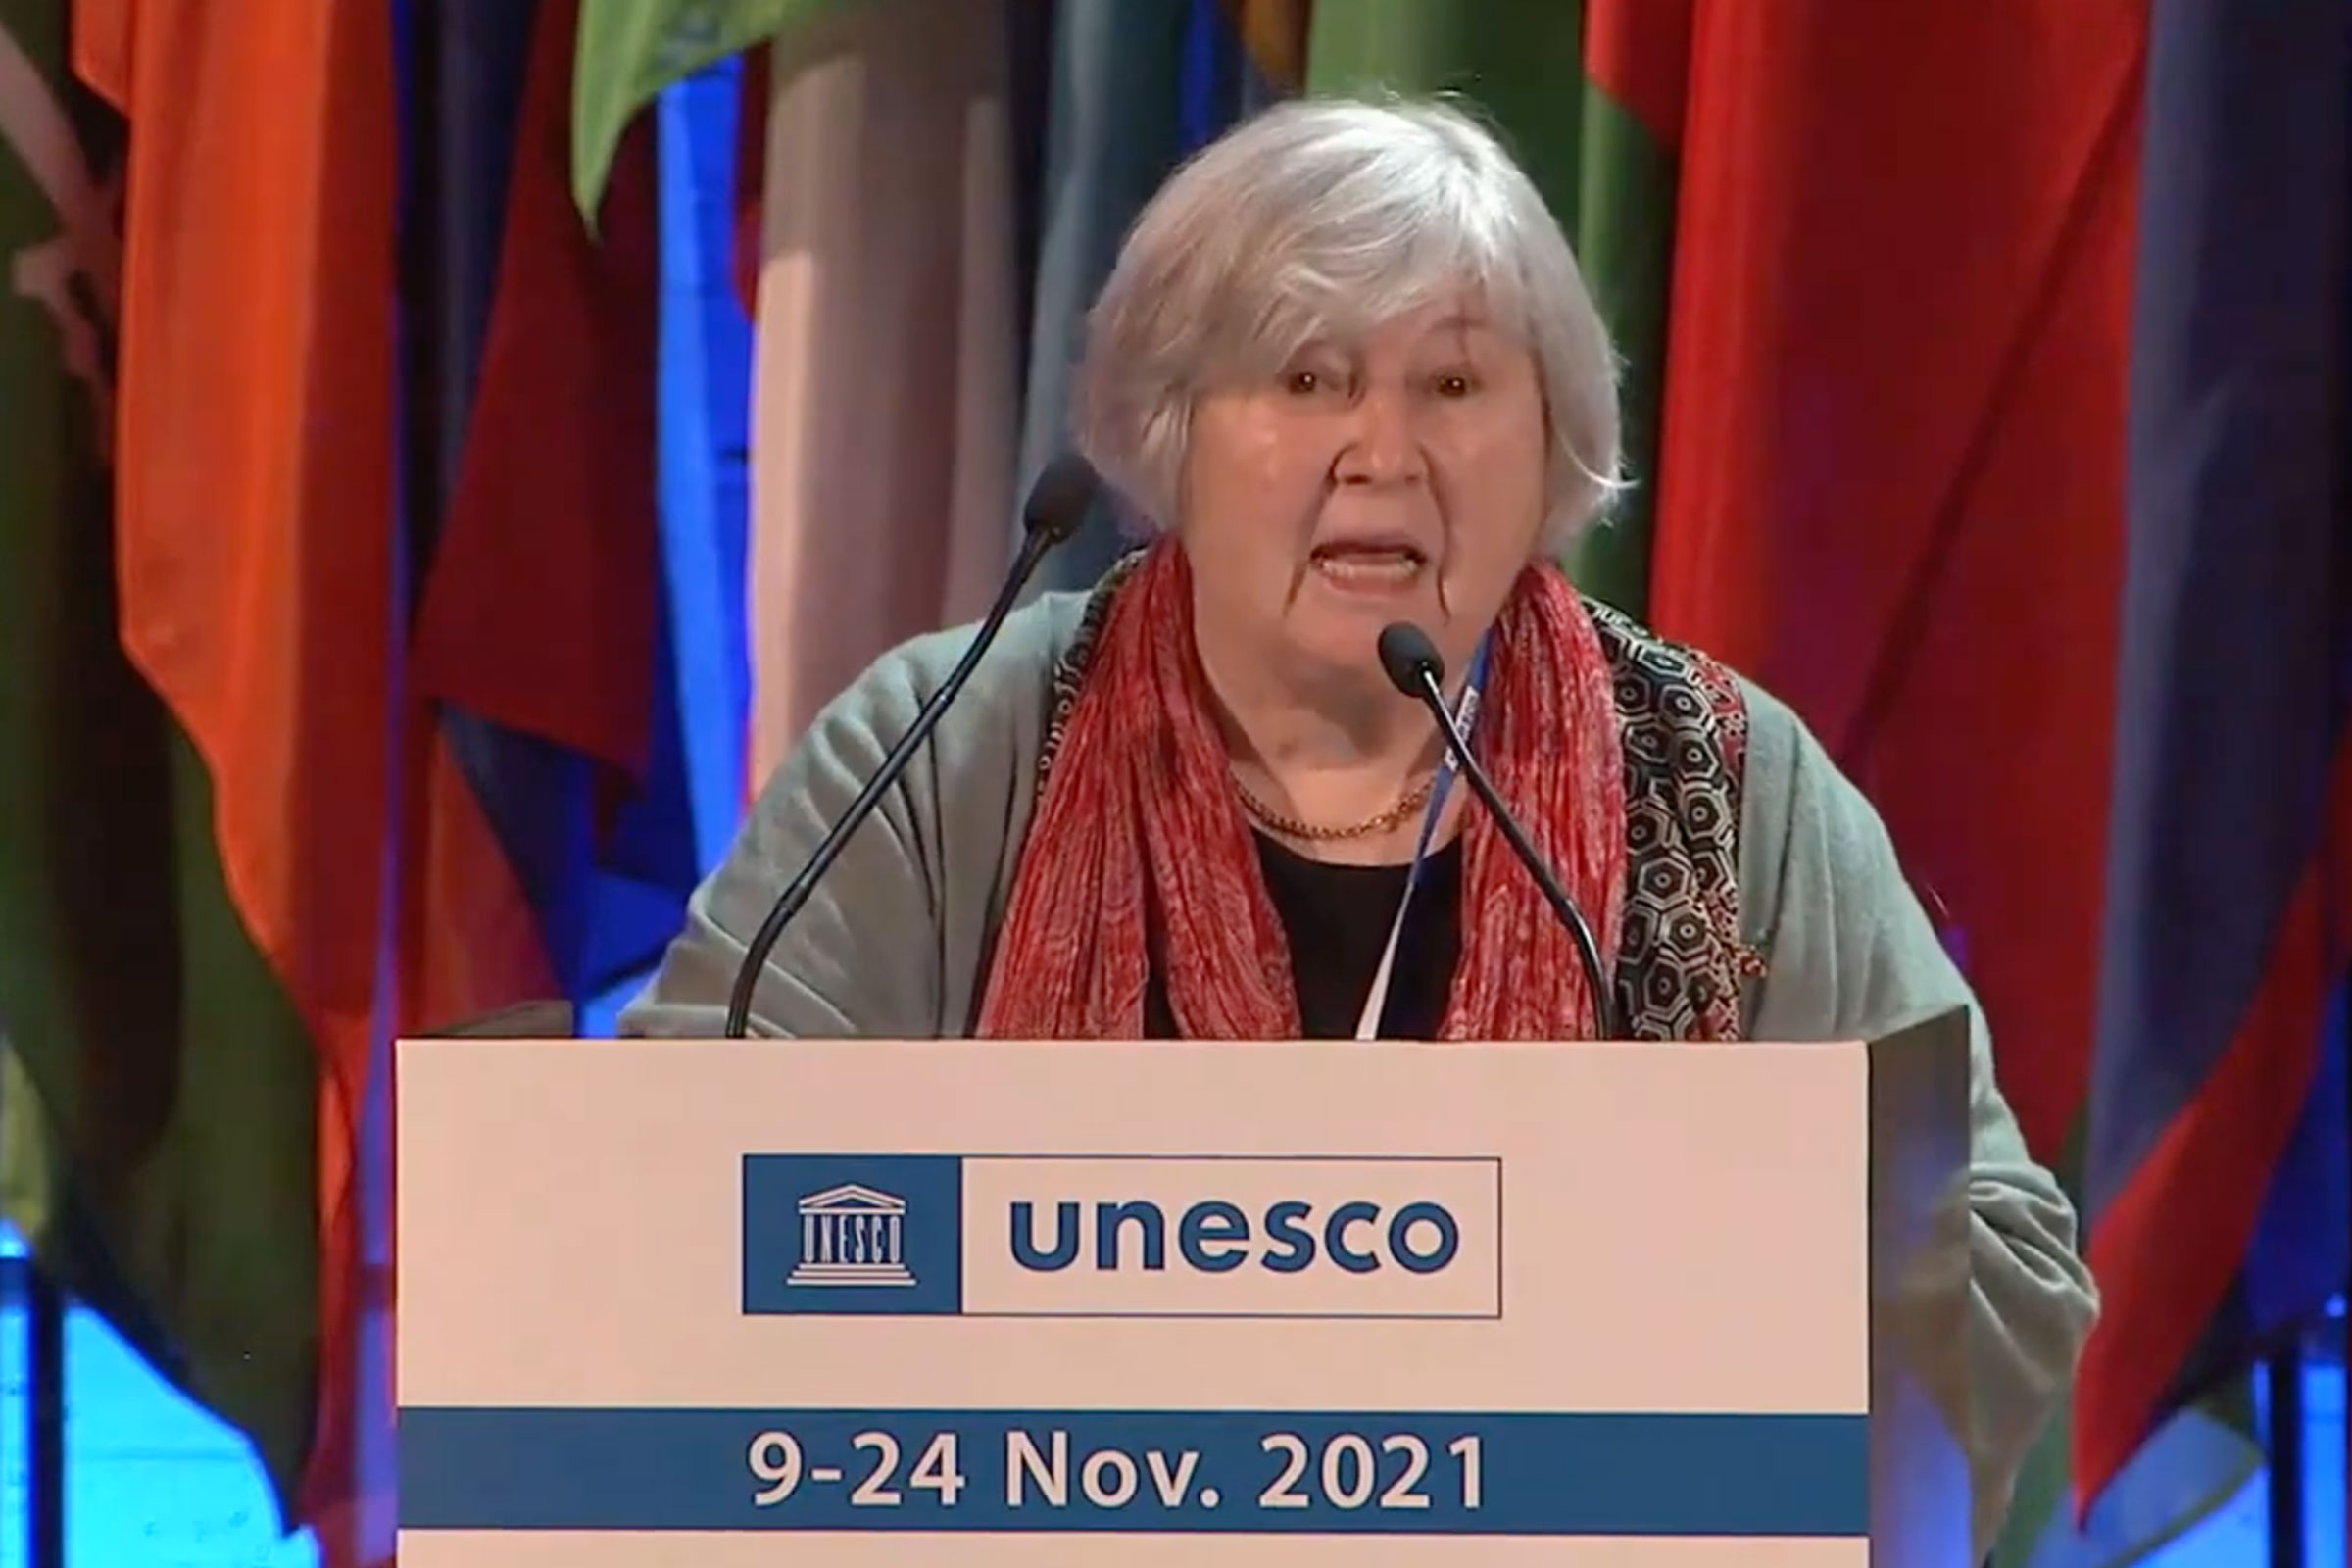 Victoria Barres speaks at UNESCO